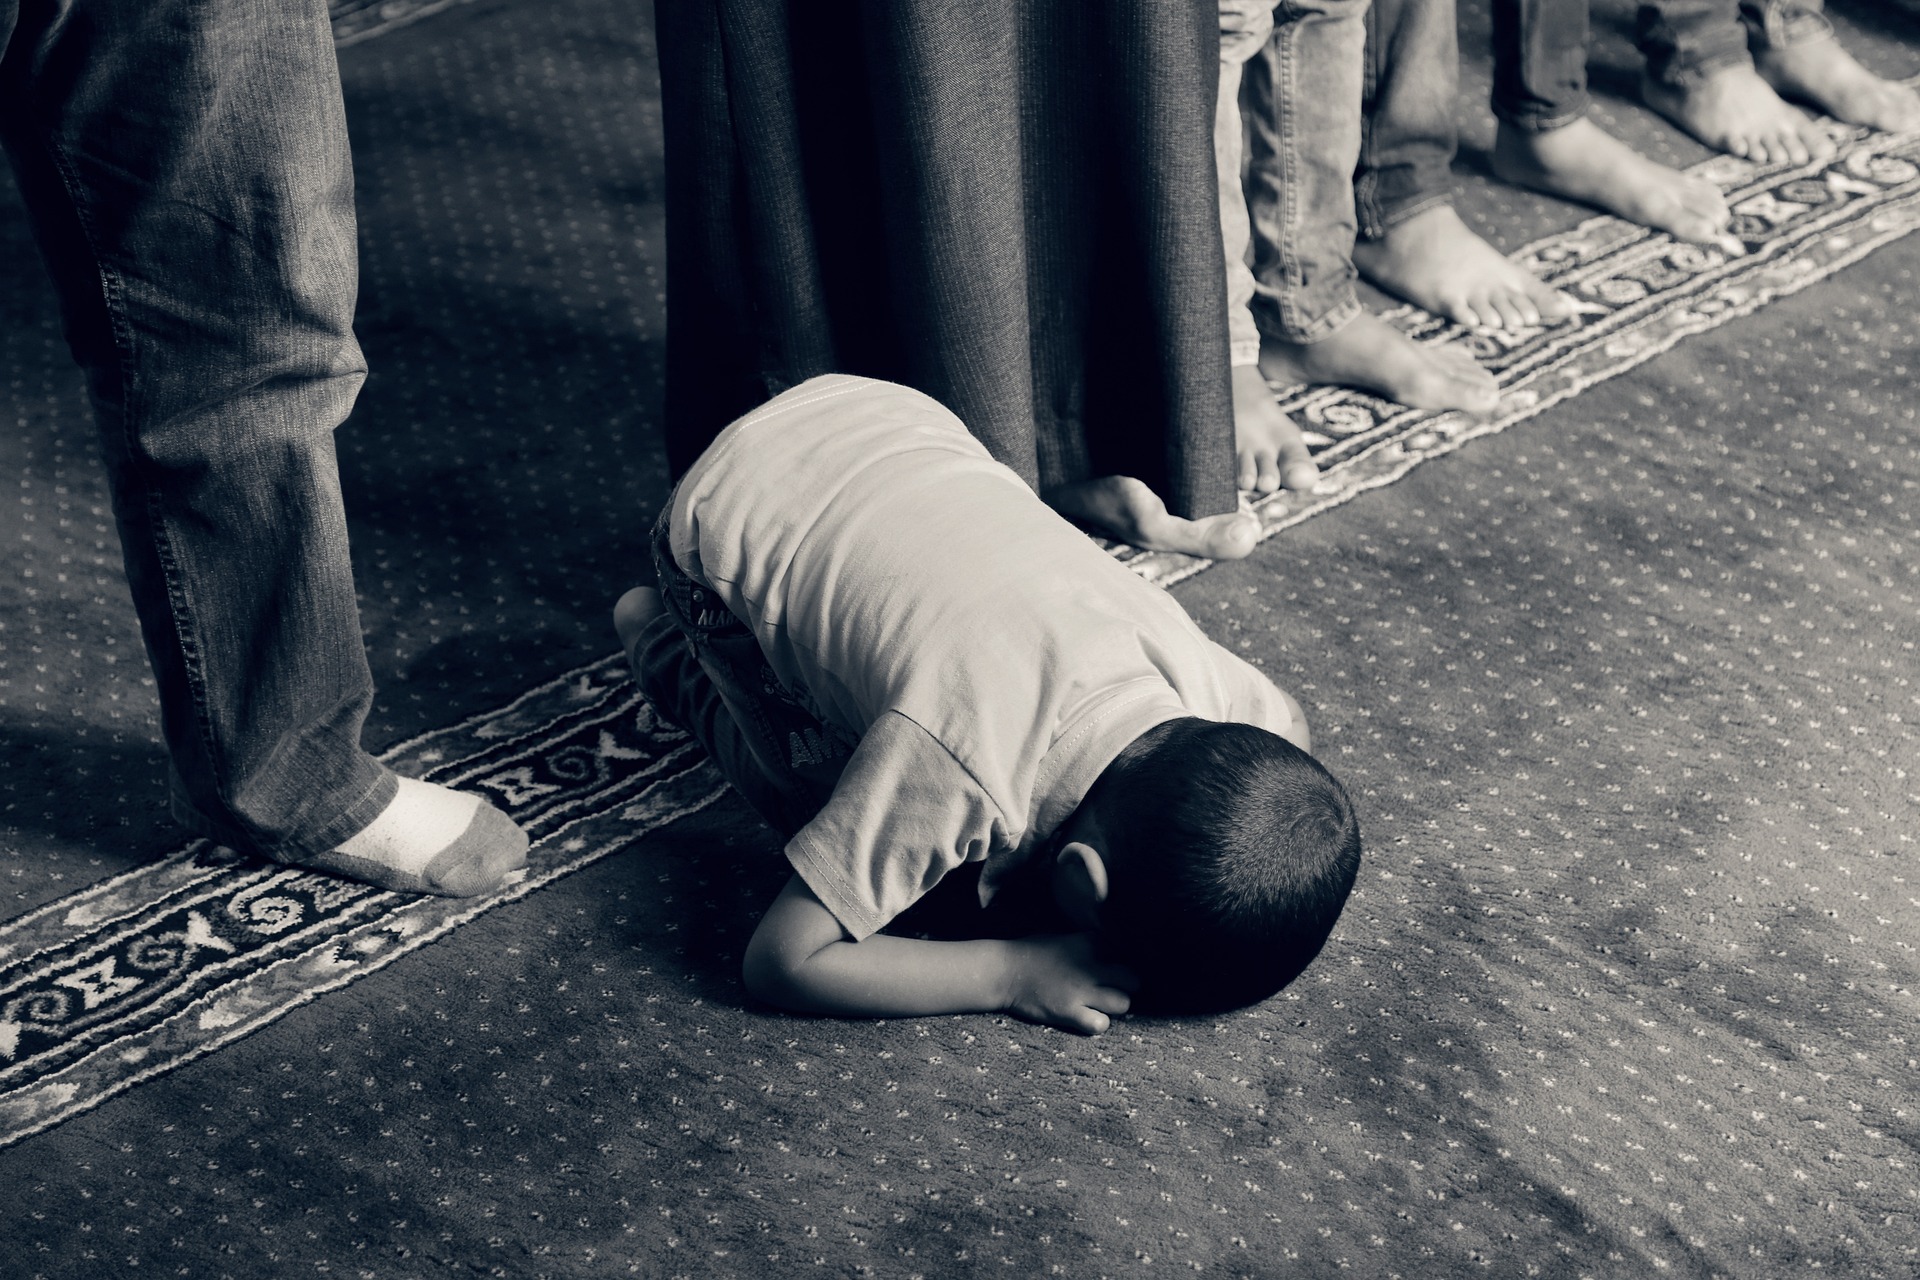 kids praying islam and quran